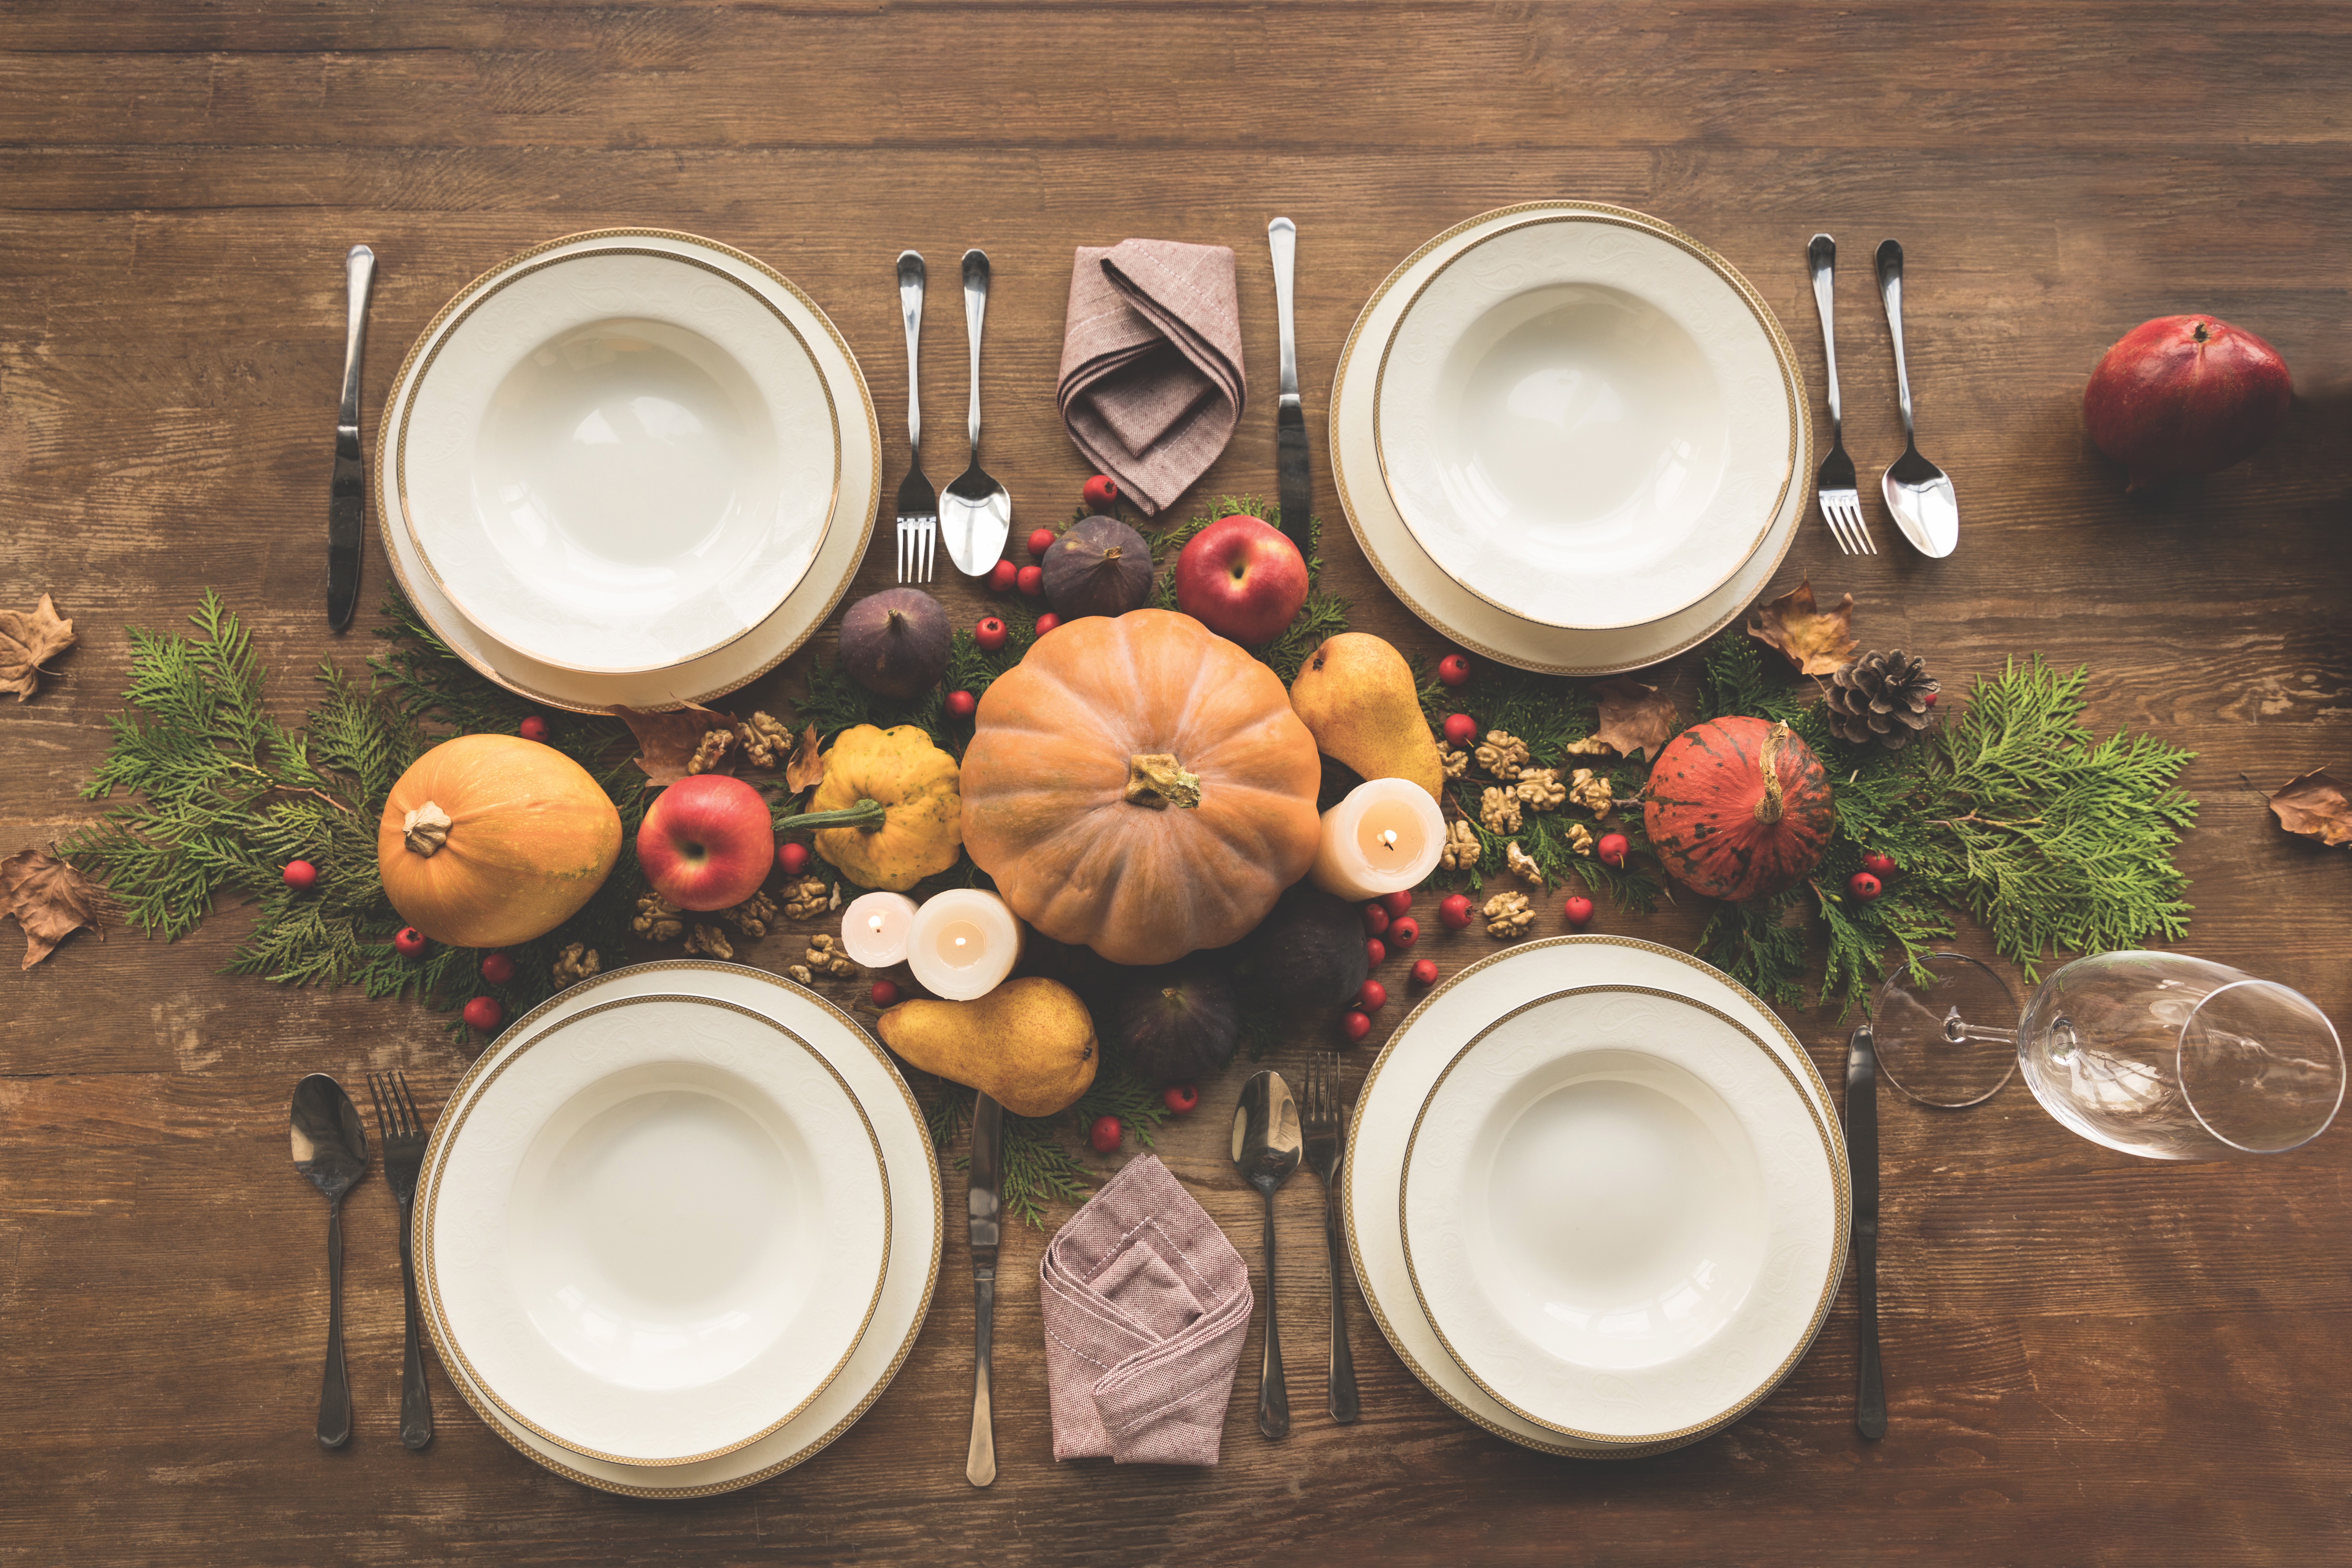 A Thanksgiving Meal Haggadah